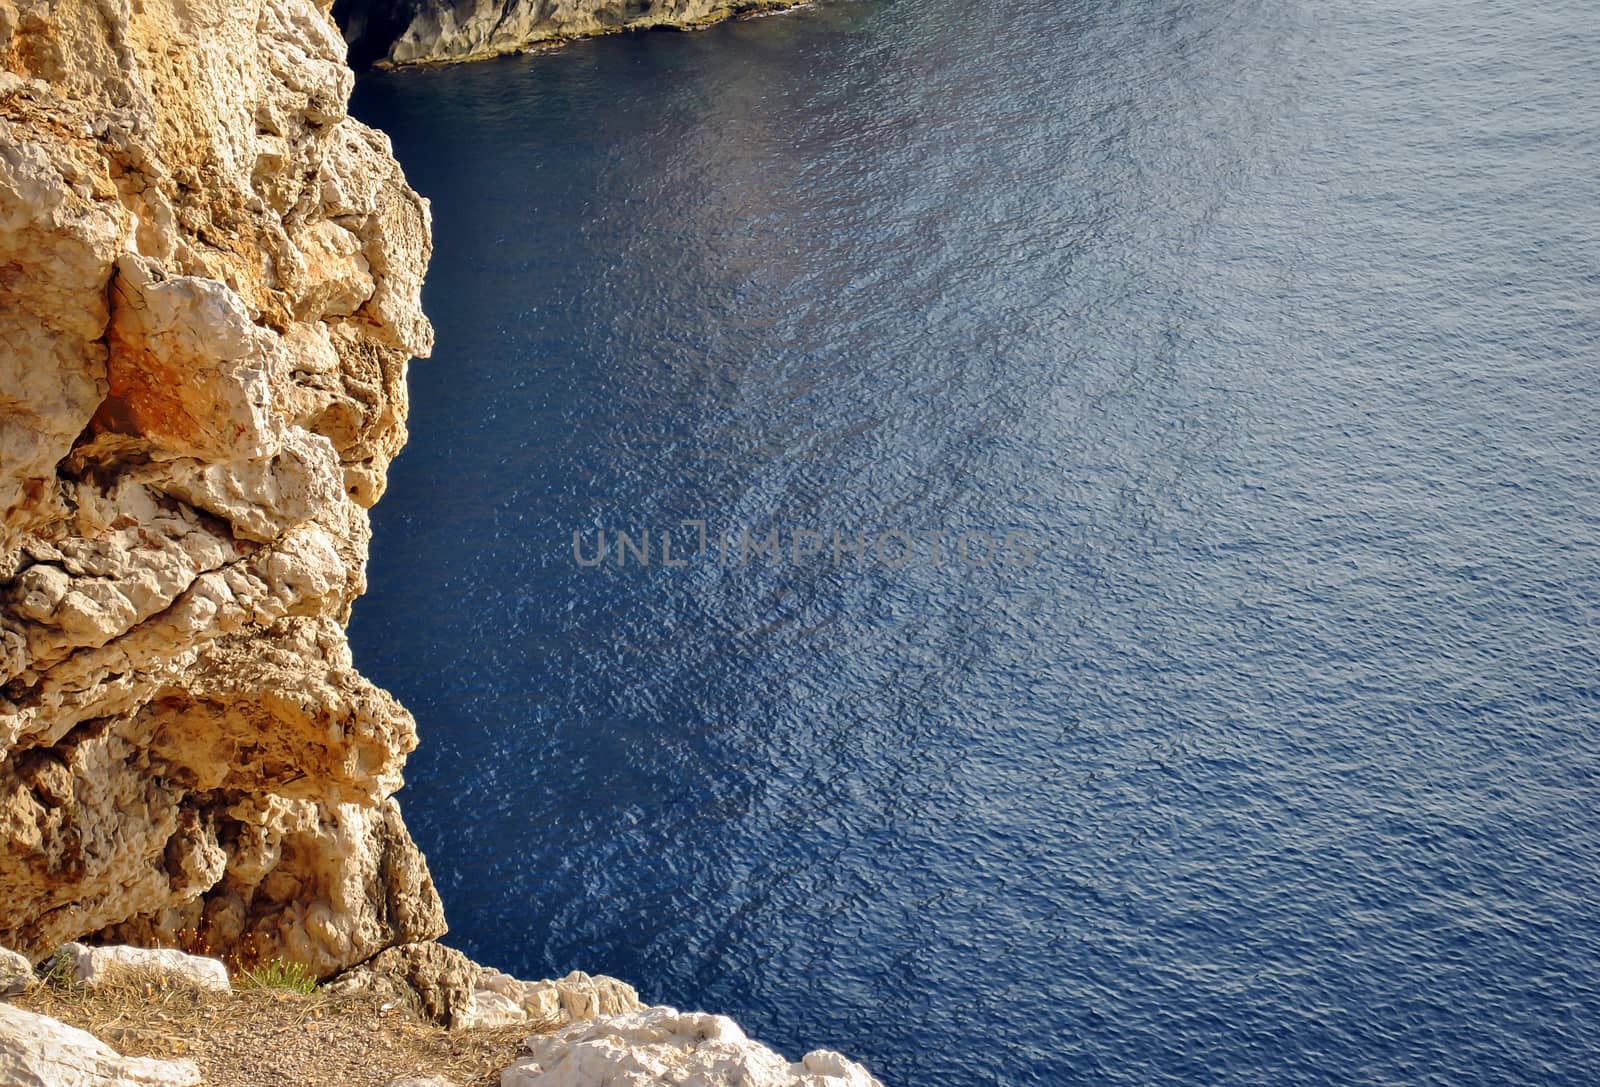 rocky coastline overlooking a blue calm sea in Sardinia, Italy